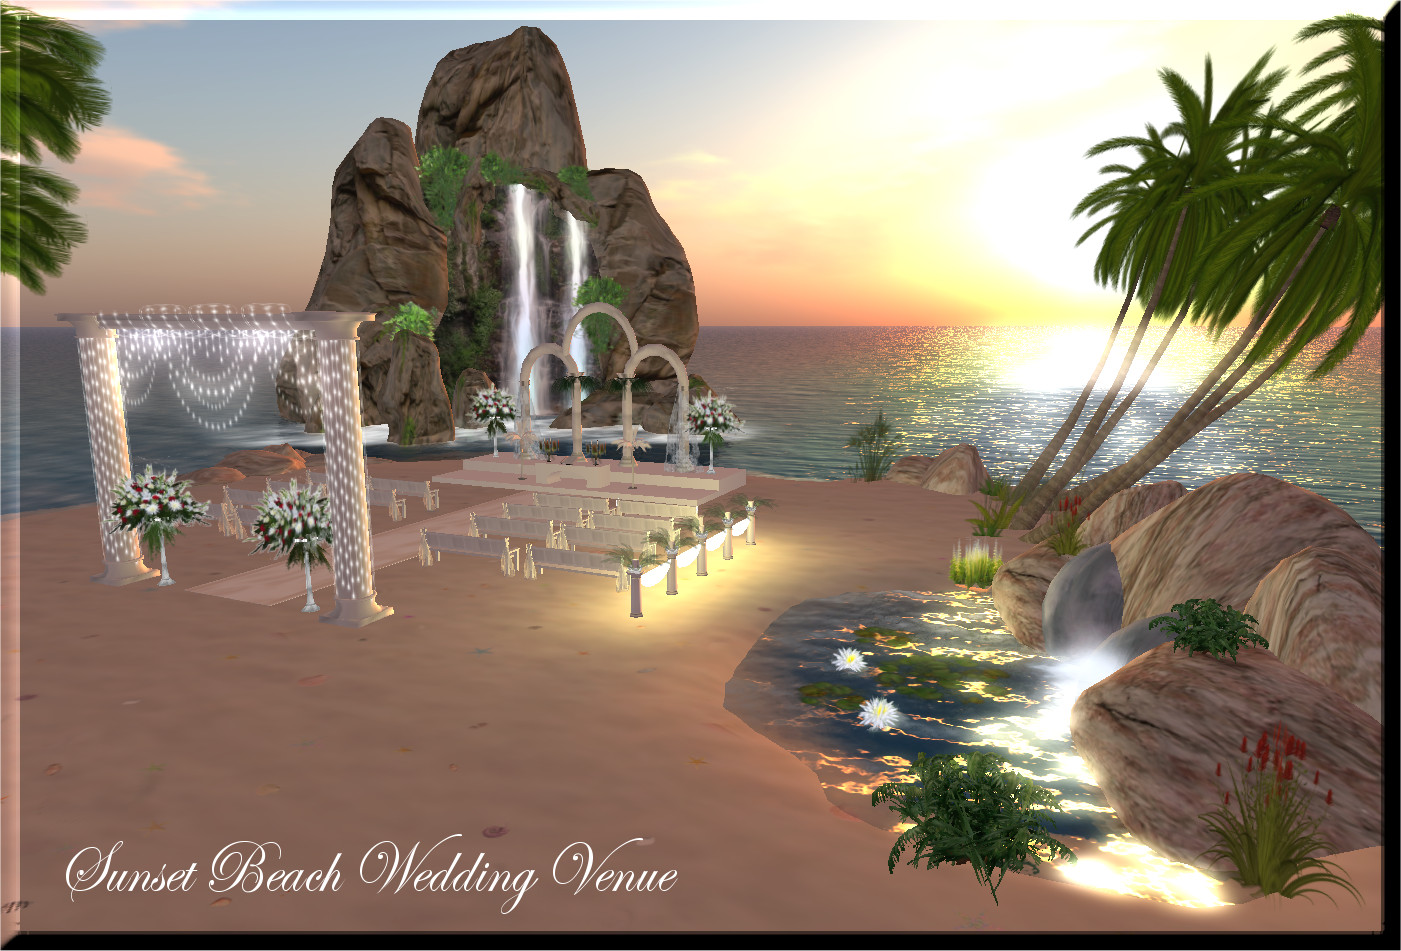 Sunset Beach Weddings
 Cherished Moments The Sunset Beach Wedding